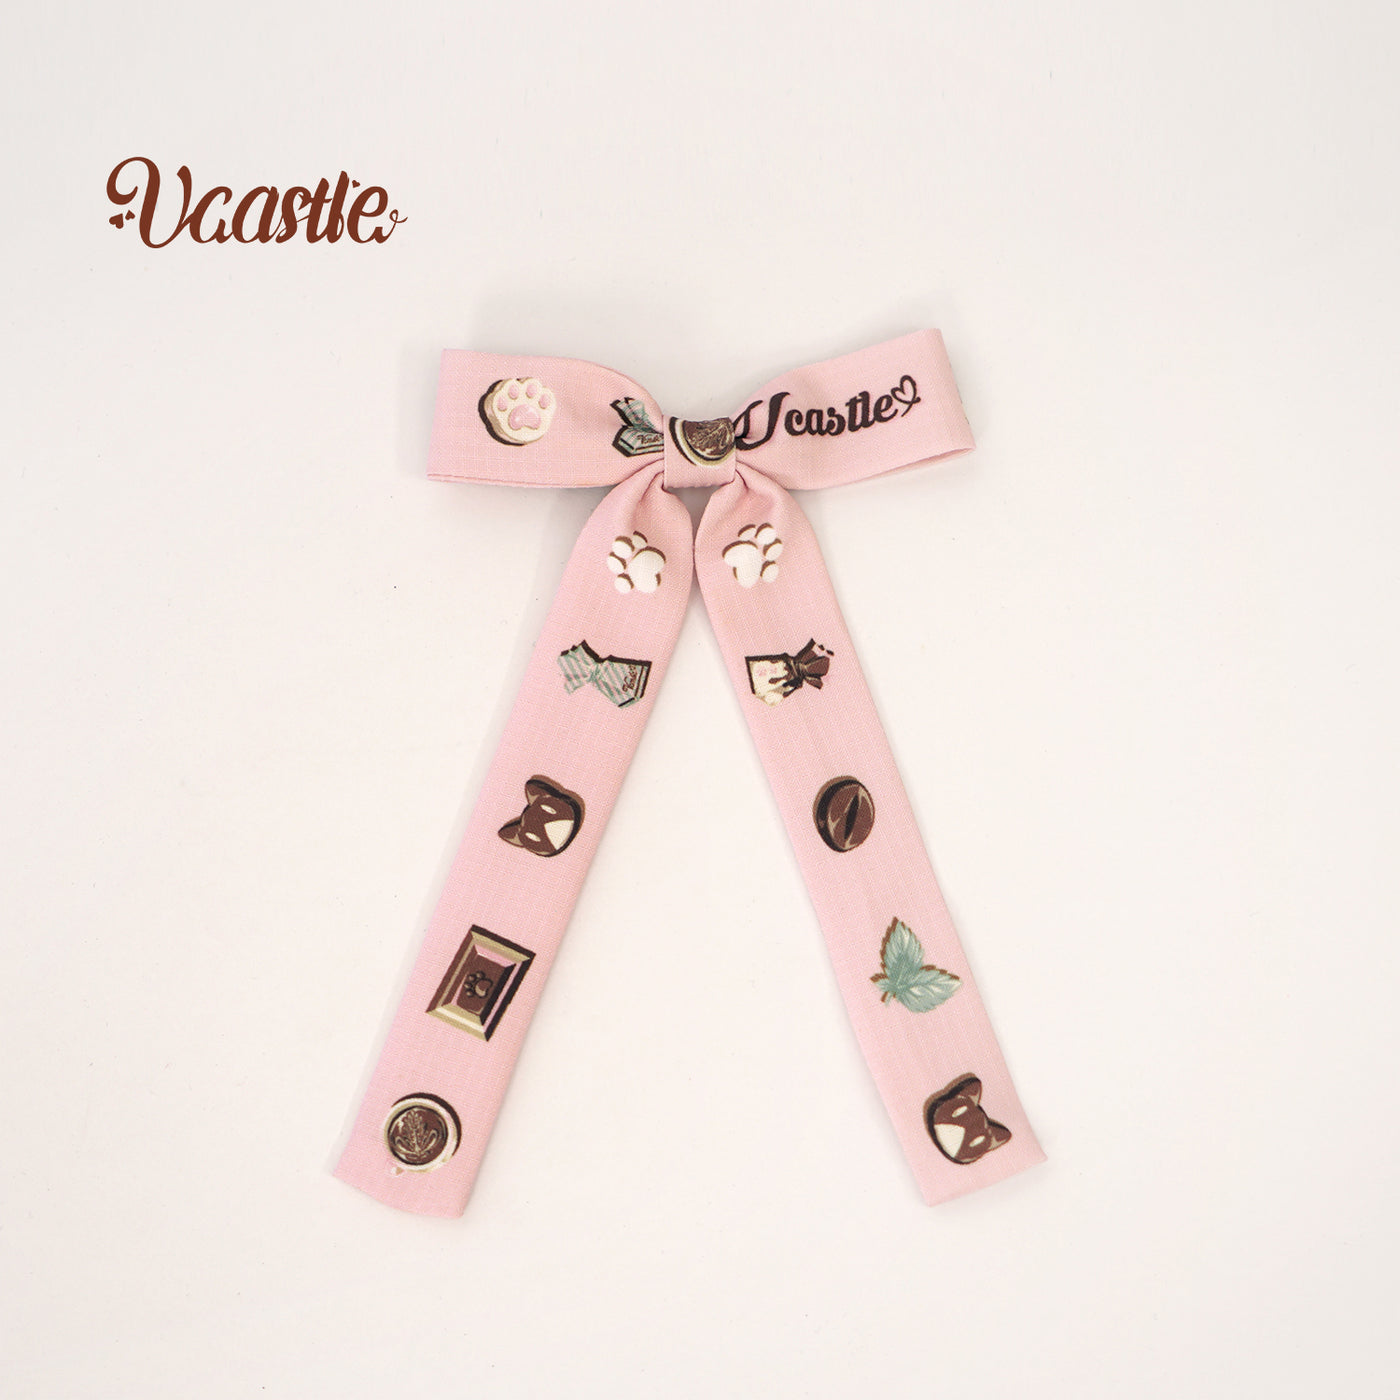 Vcastle~Mocha Chocolate~Kawaii Lolita Accessory Multicolors a pink long-tailed bow hair clip  